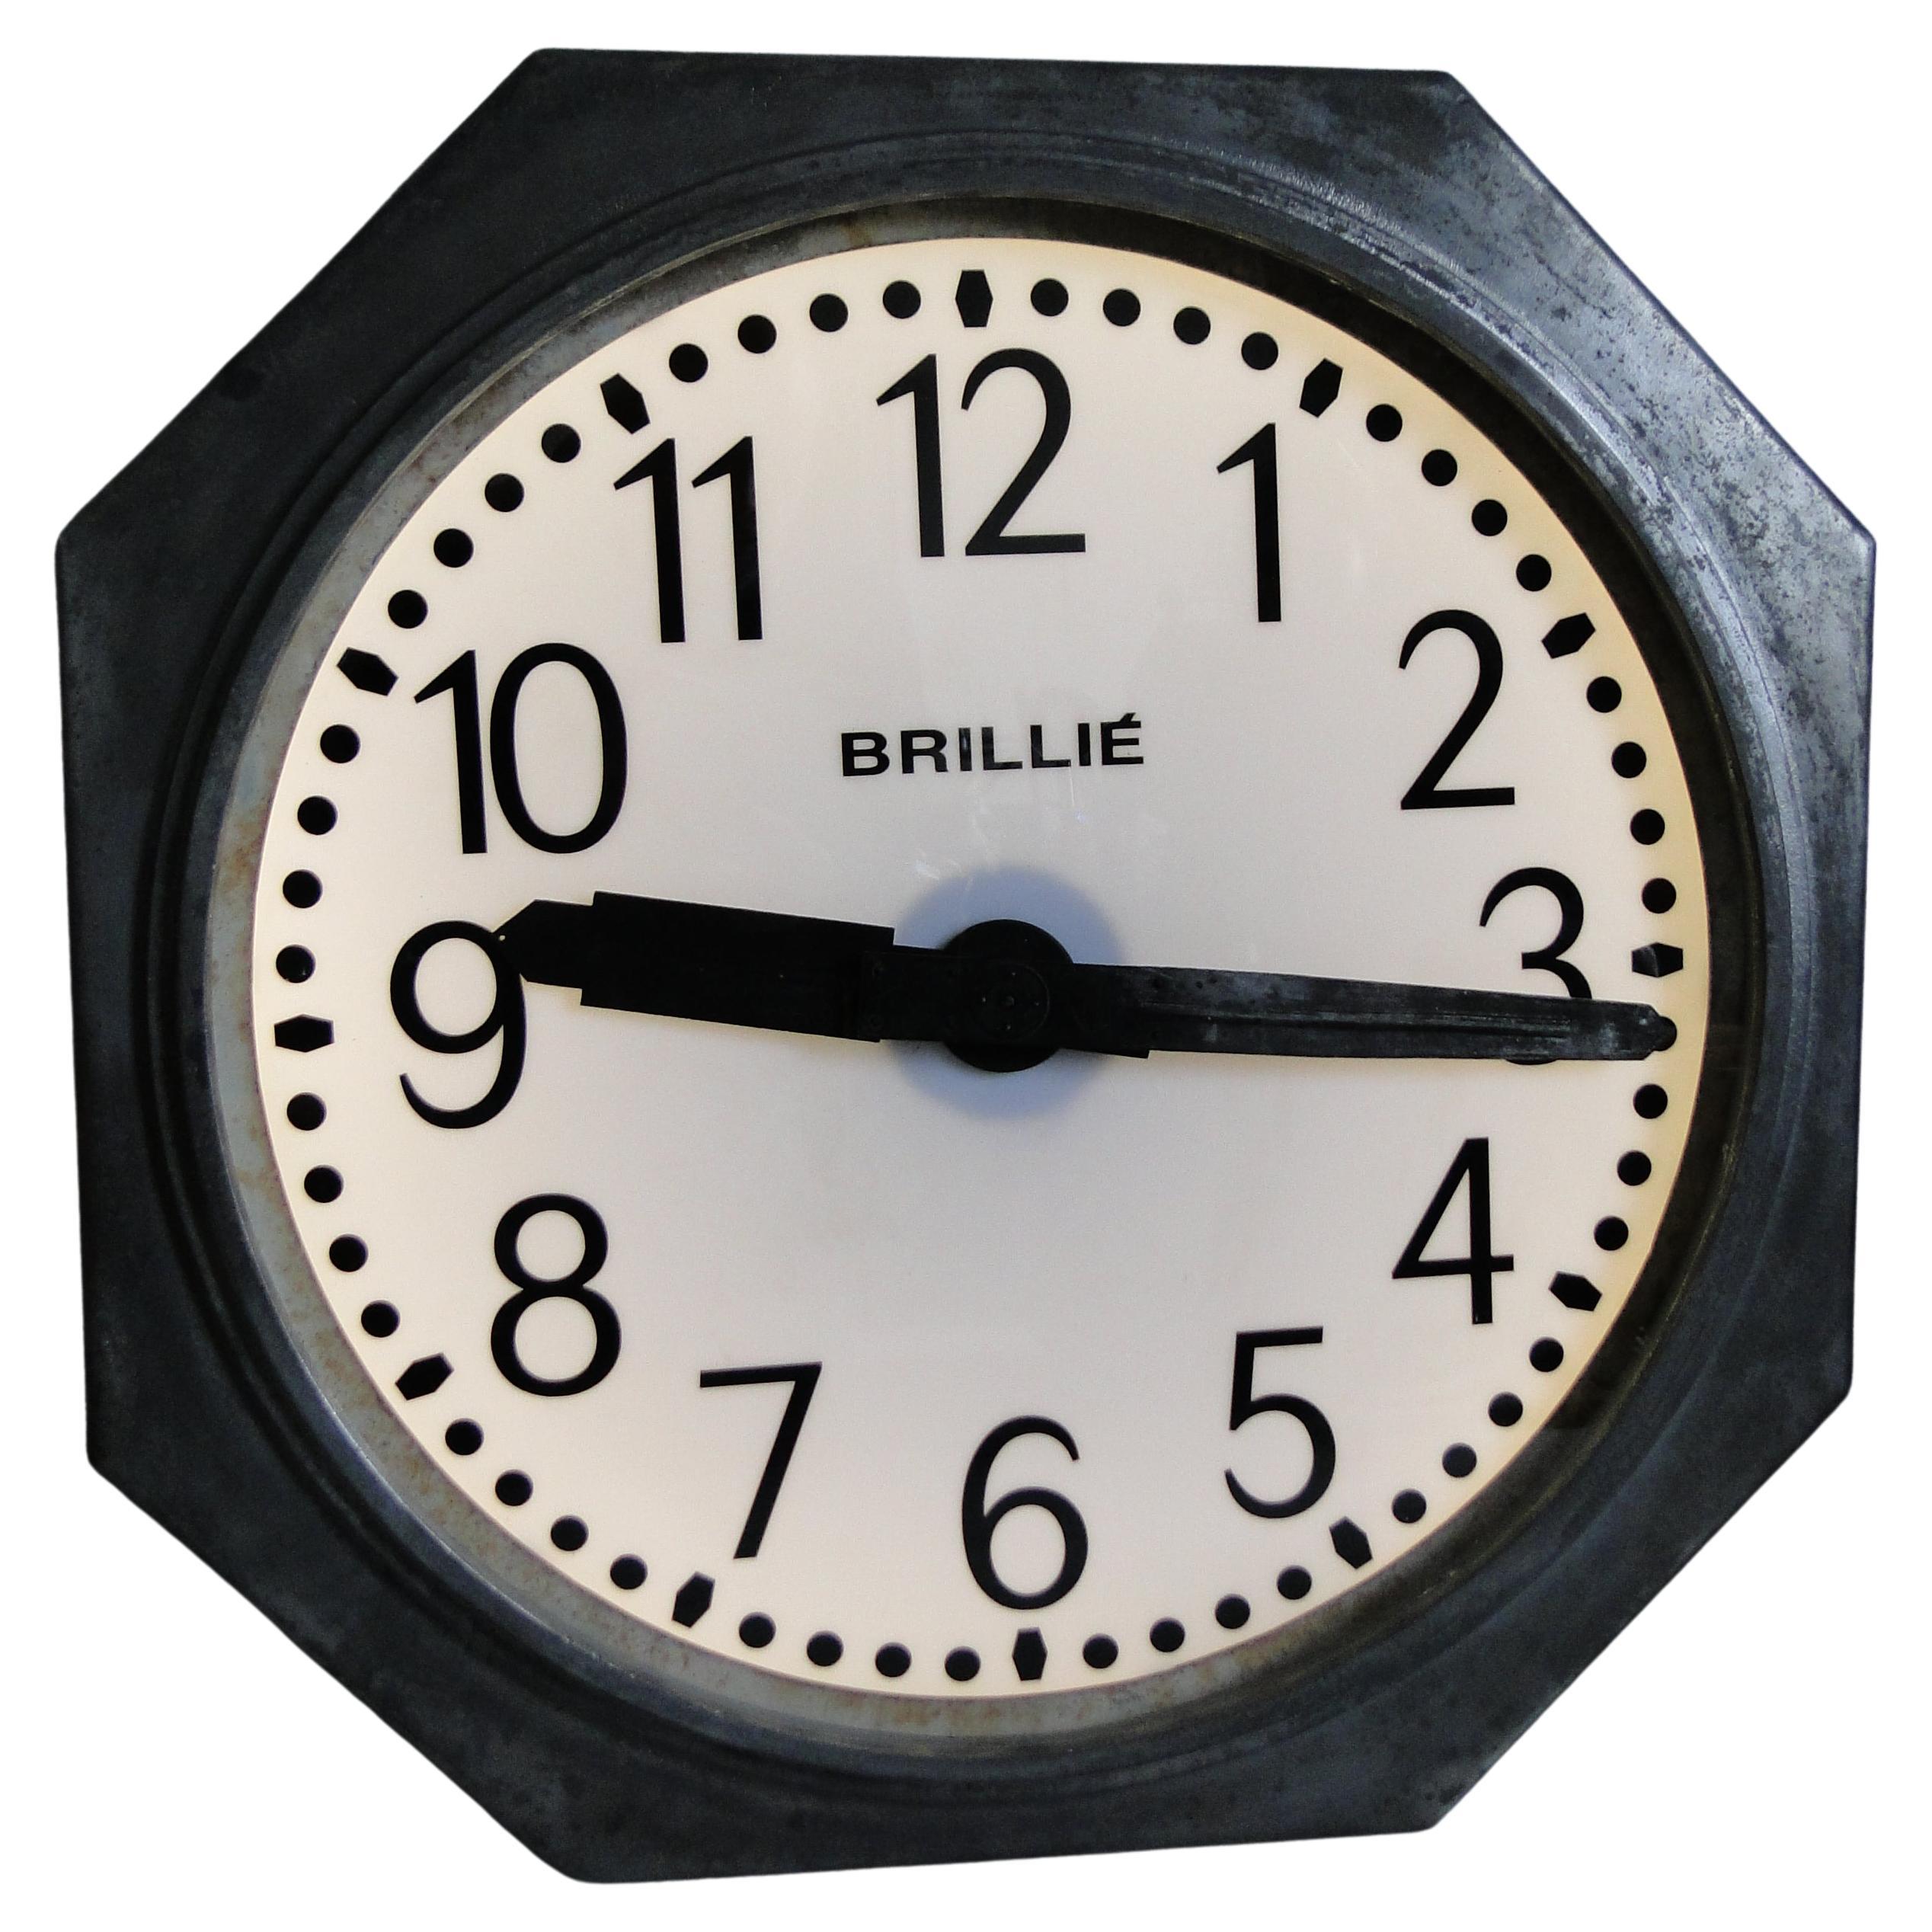 Brillie Vintage French  Station Railway Clock Factory Industrial  Paris France